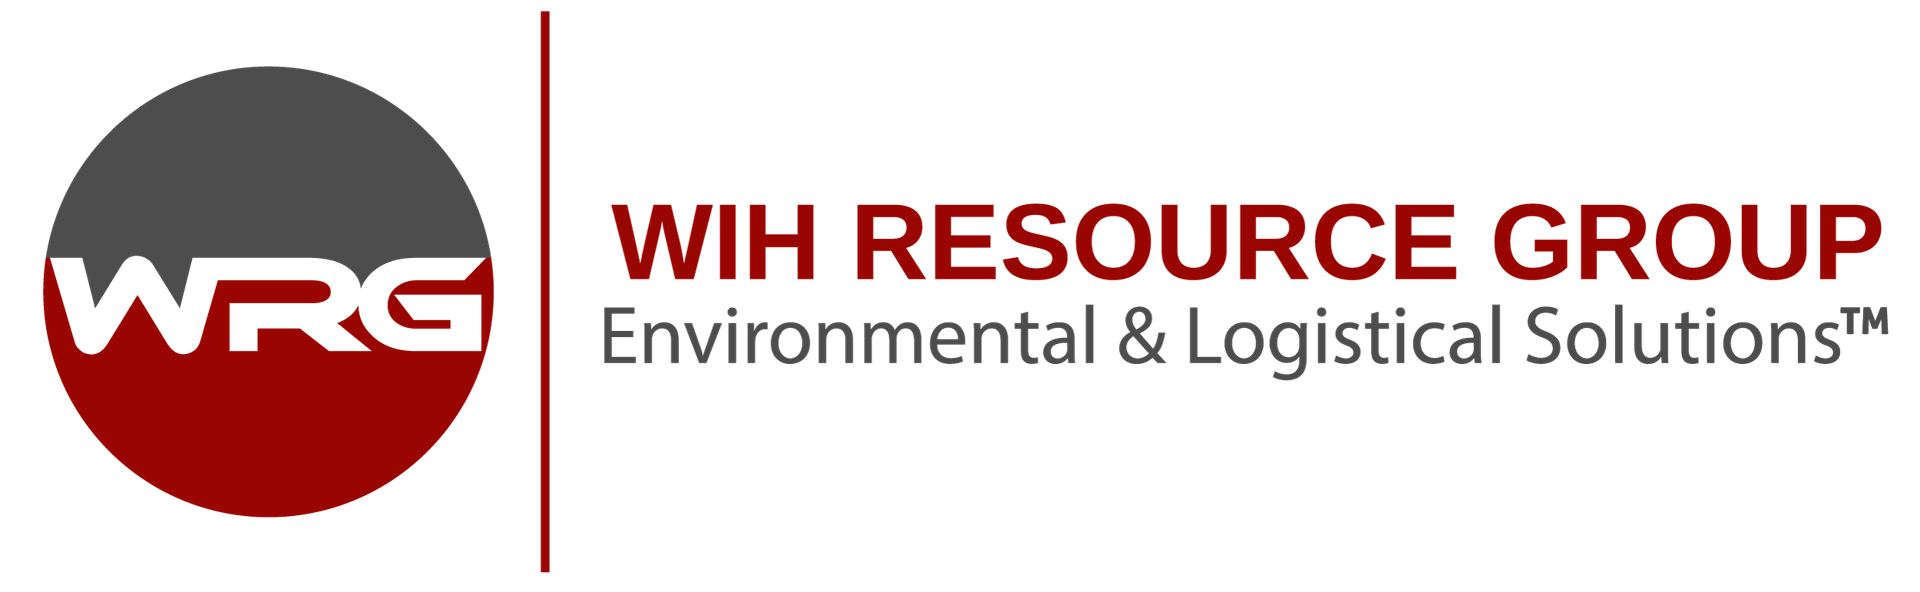 WIH Resource Group